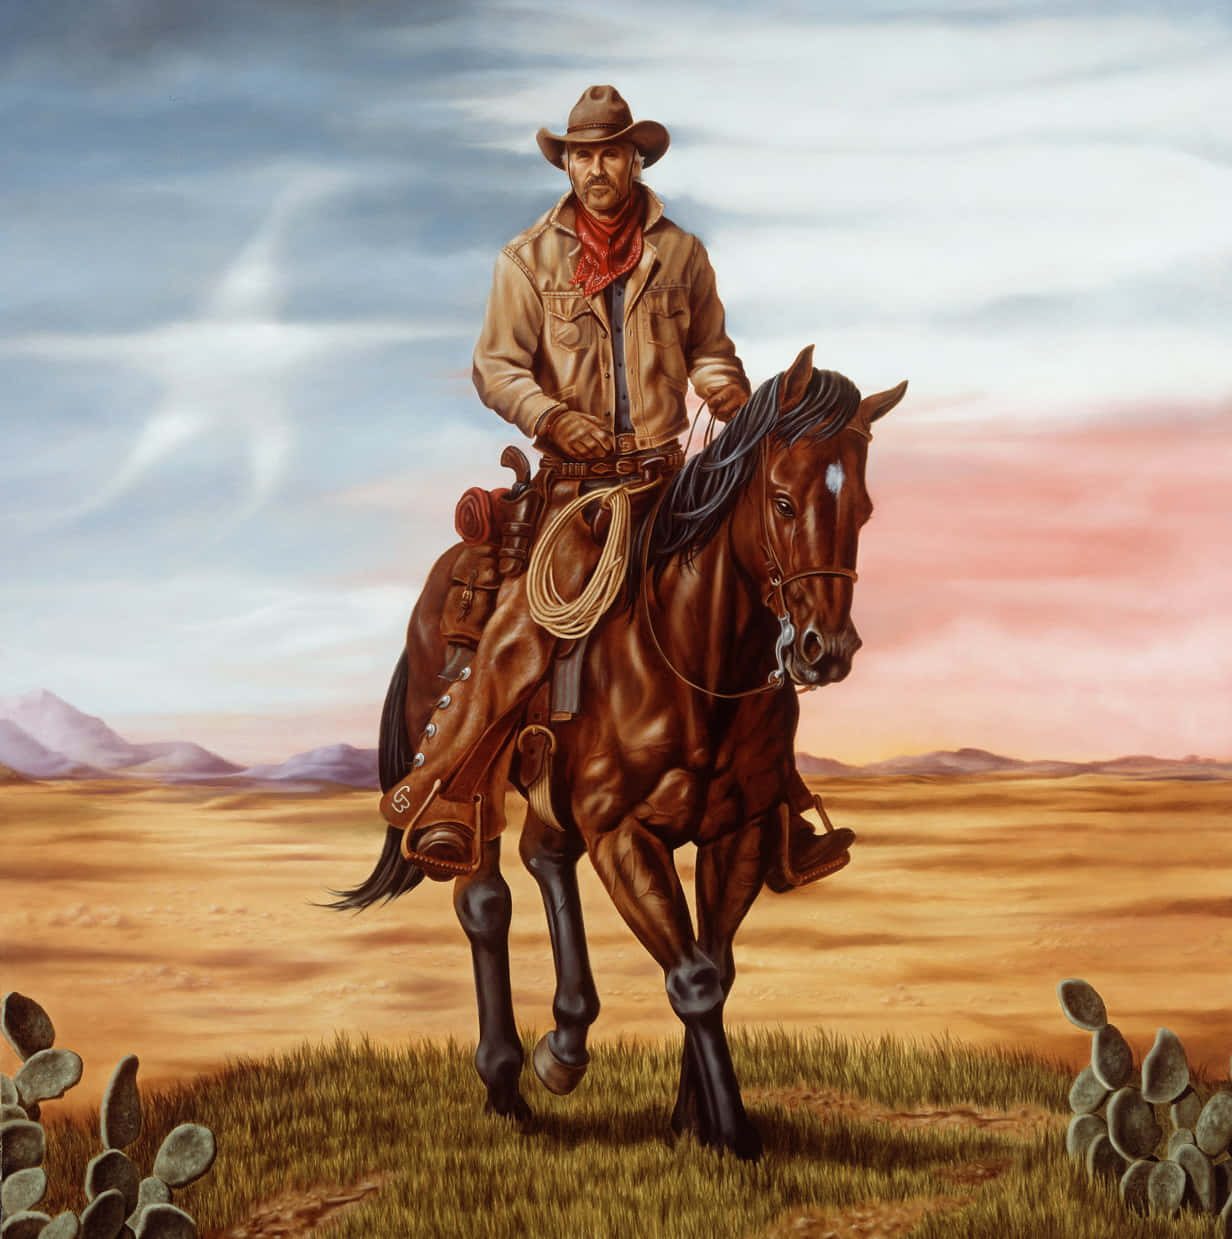 A Cowboy Riding Through a Western Landscape